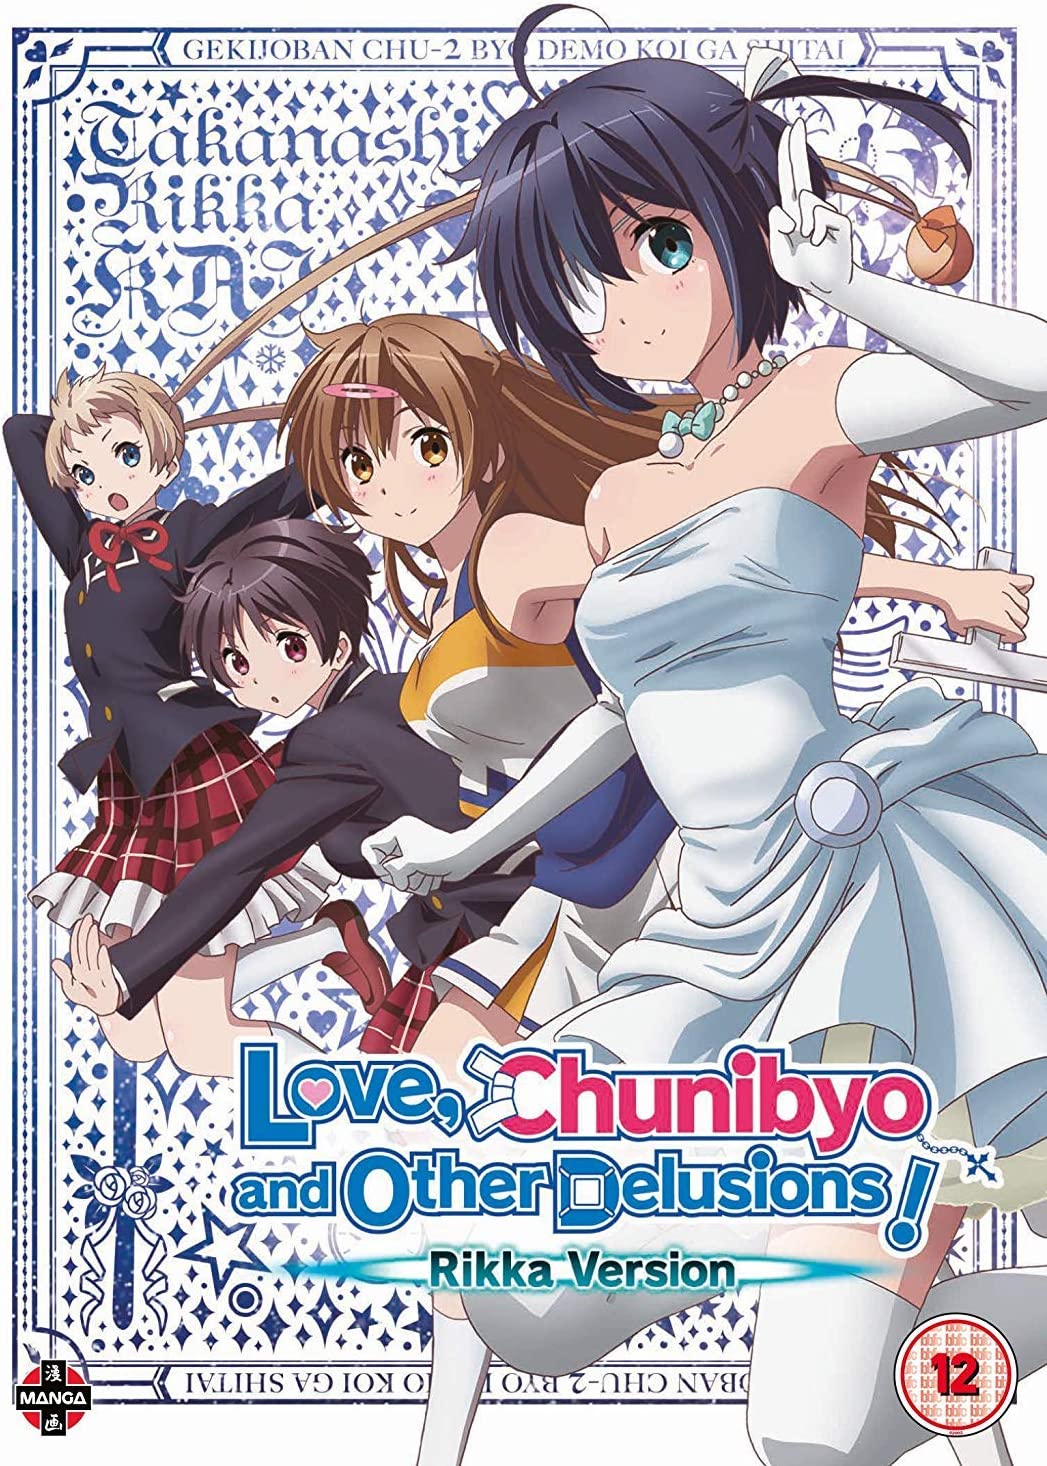 Love, Chunibyo & Other Delusions! the Movie: Rikka Takanashi Revision  (2013)